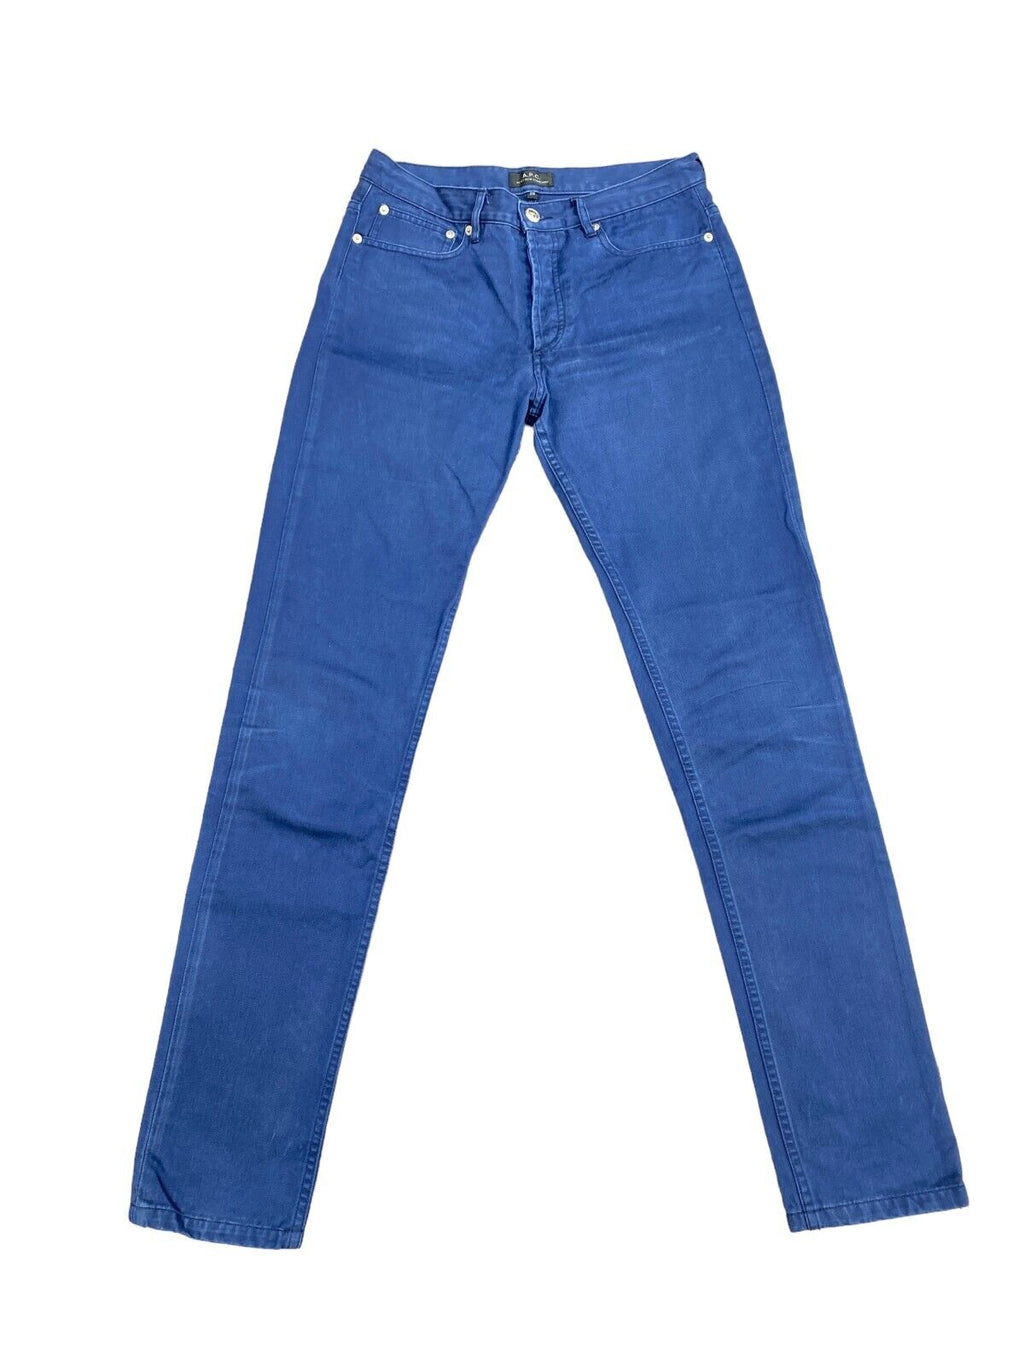 Petit New Standard Blue Jeans